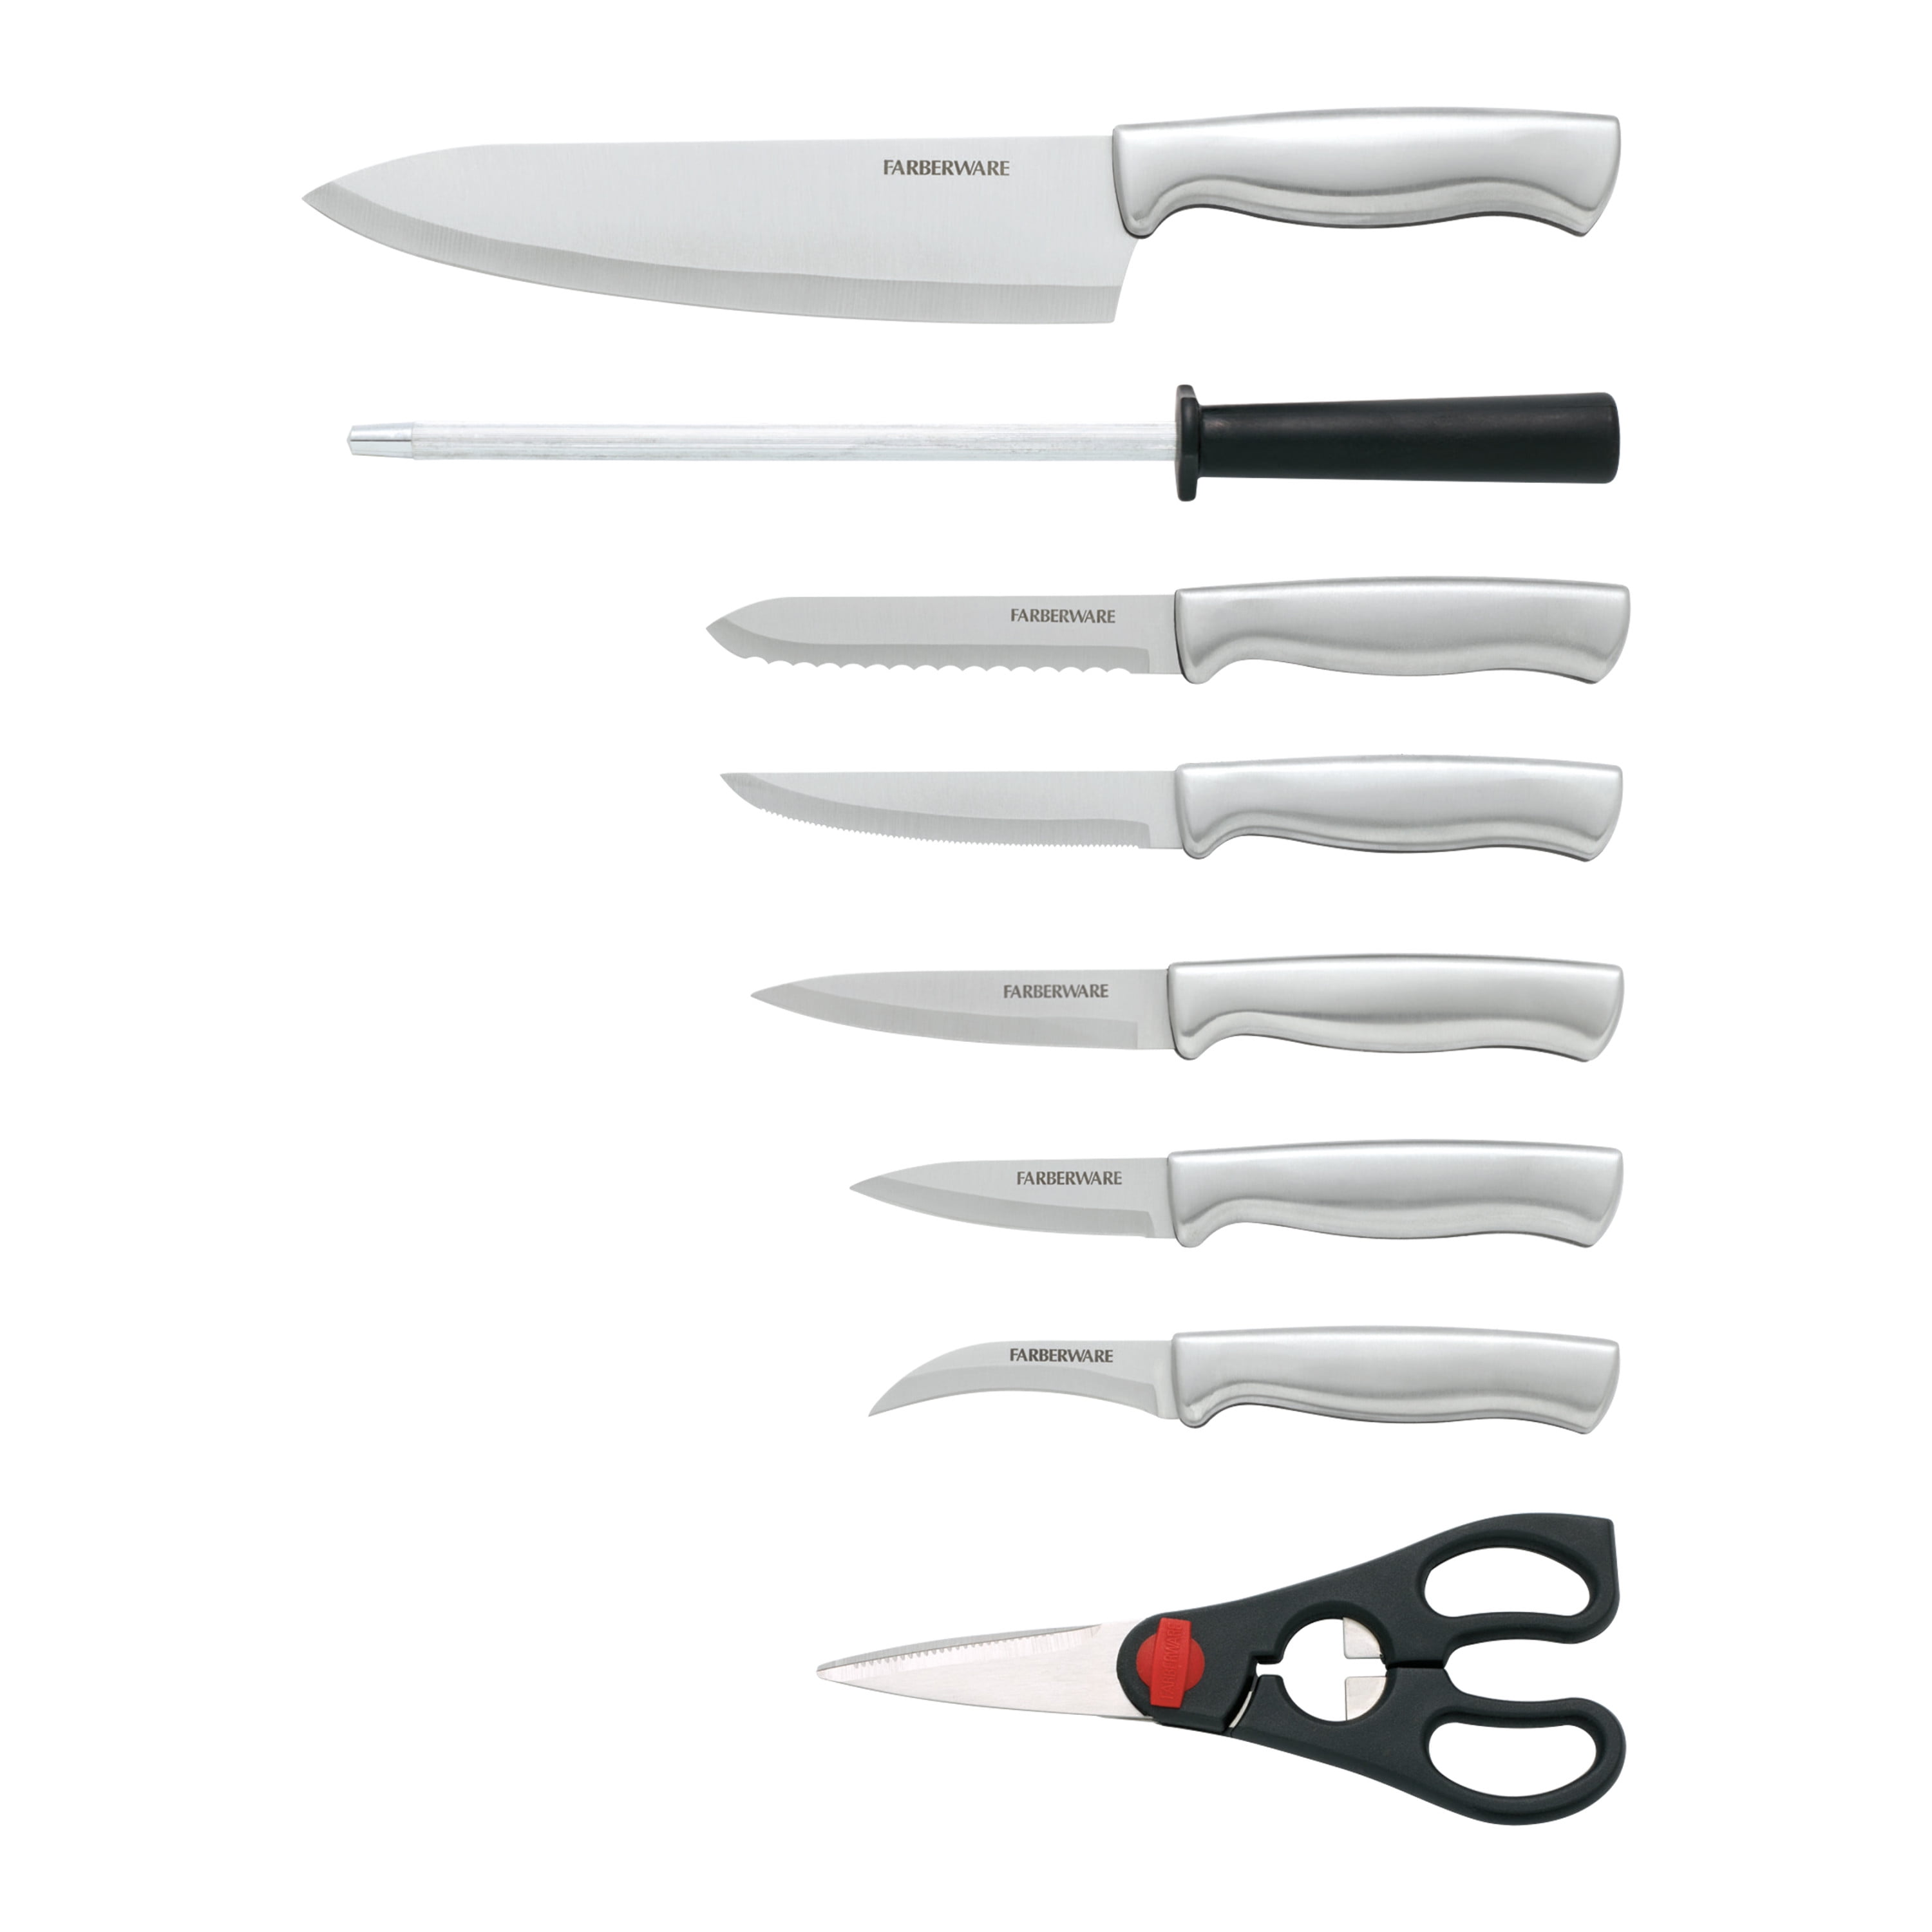 Farberware 12 Pc. Resin Knife Set, Cutlery, Household